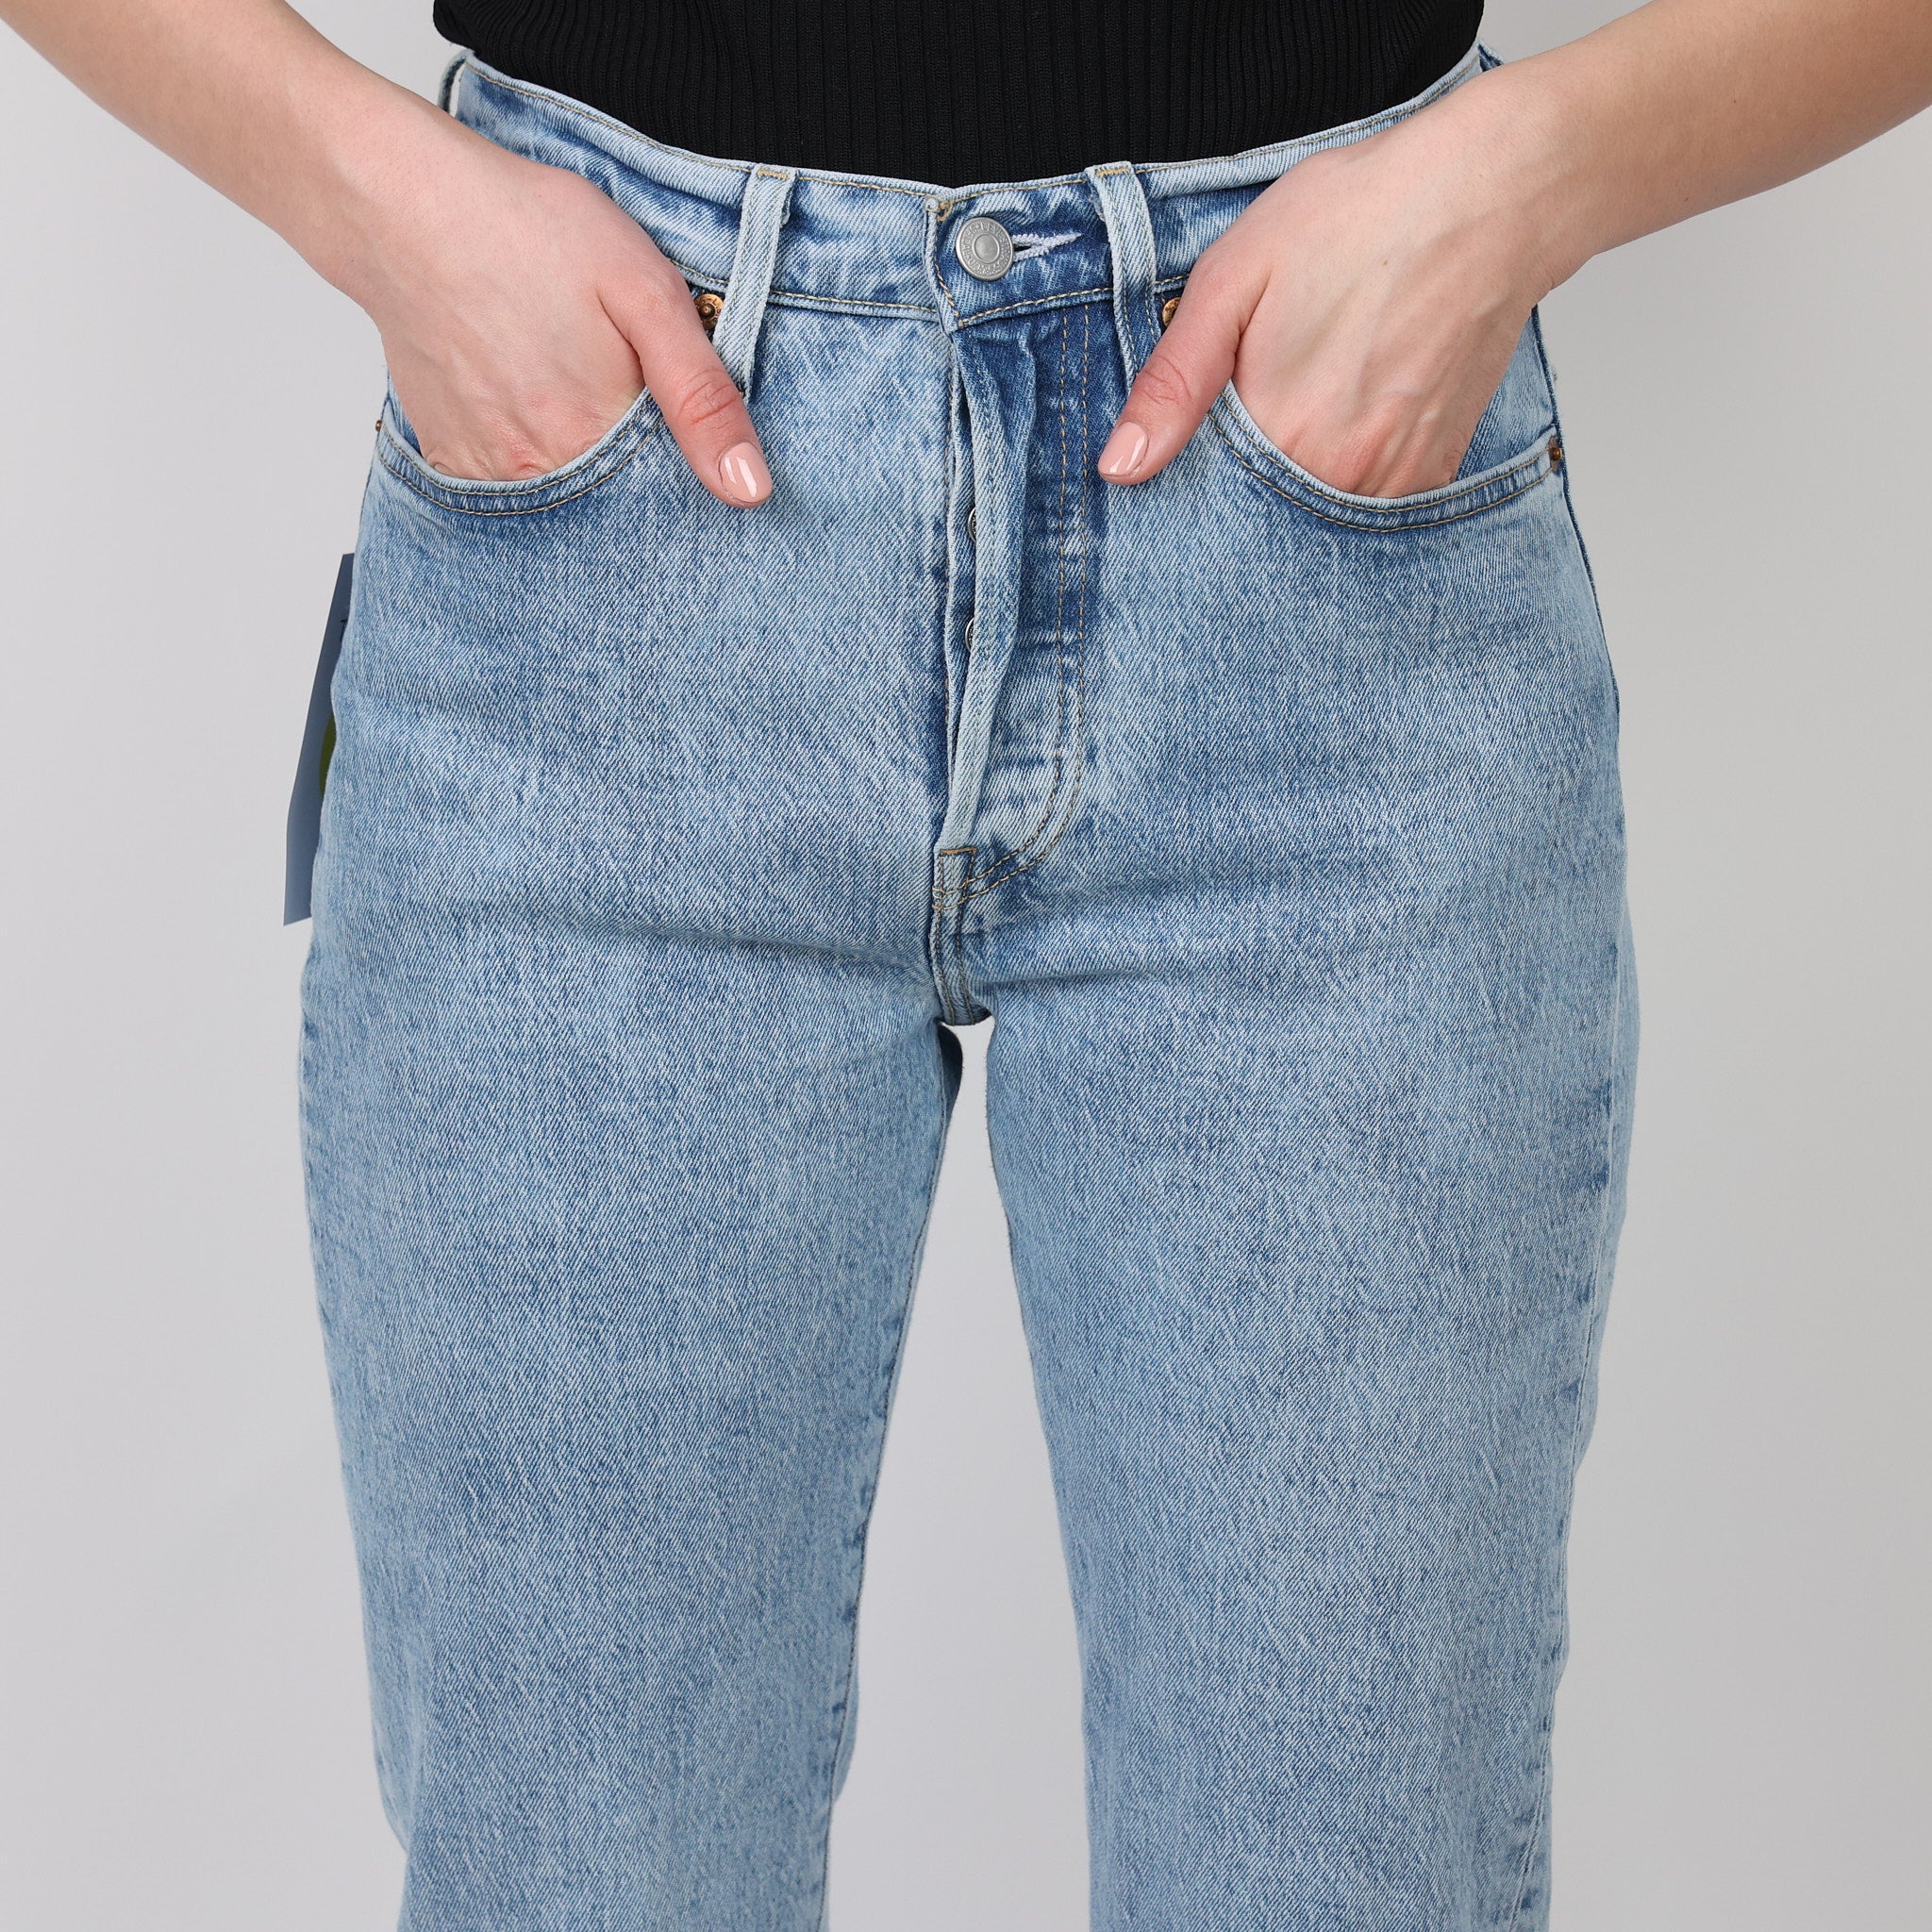 Jeans, Waist 26